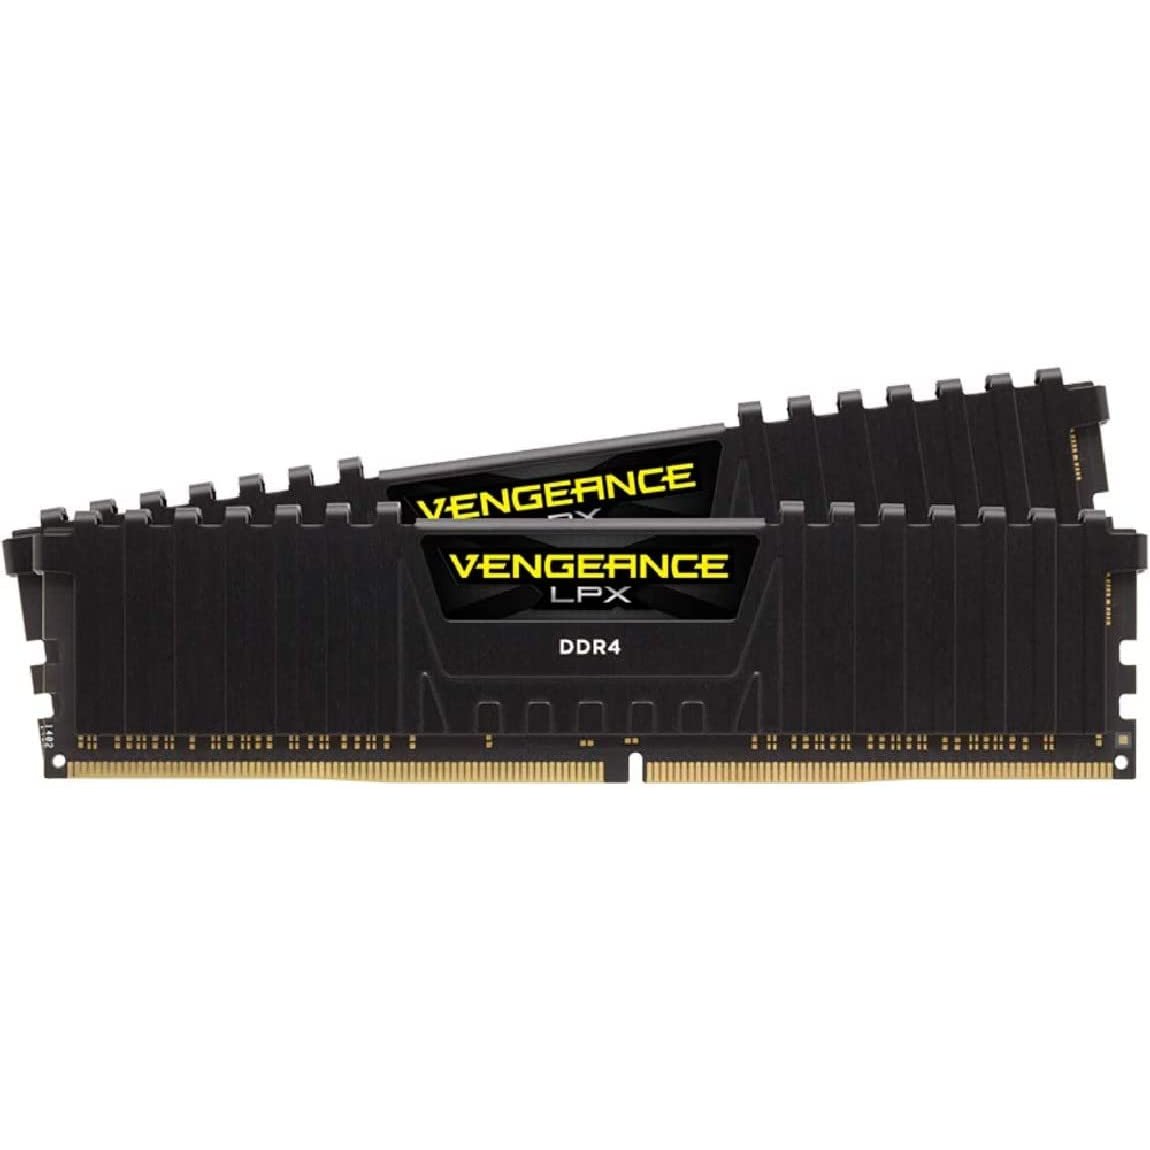 GAMEING RAM FOR PC CORSAIR DDR4 3200MHZ 16GB (2 X 8GB) VENGEANCE® LPX C16 MEMORY KIT BLACK ,Desktop RAM